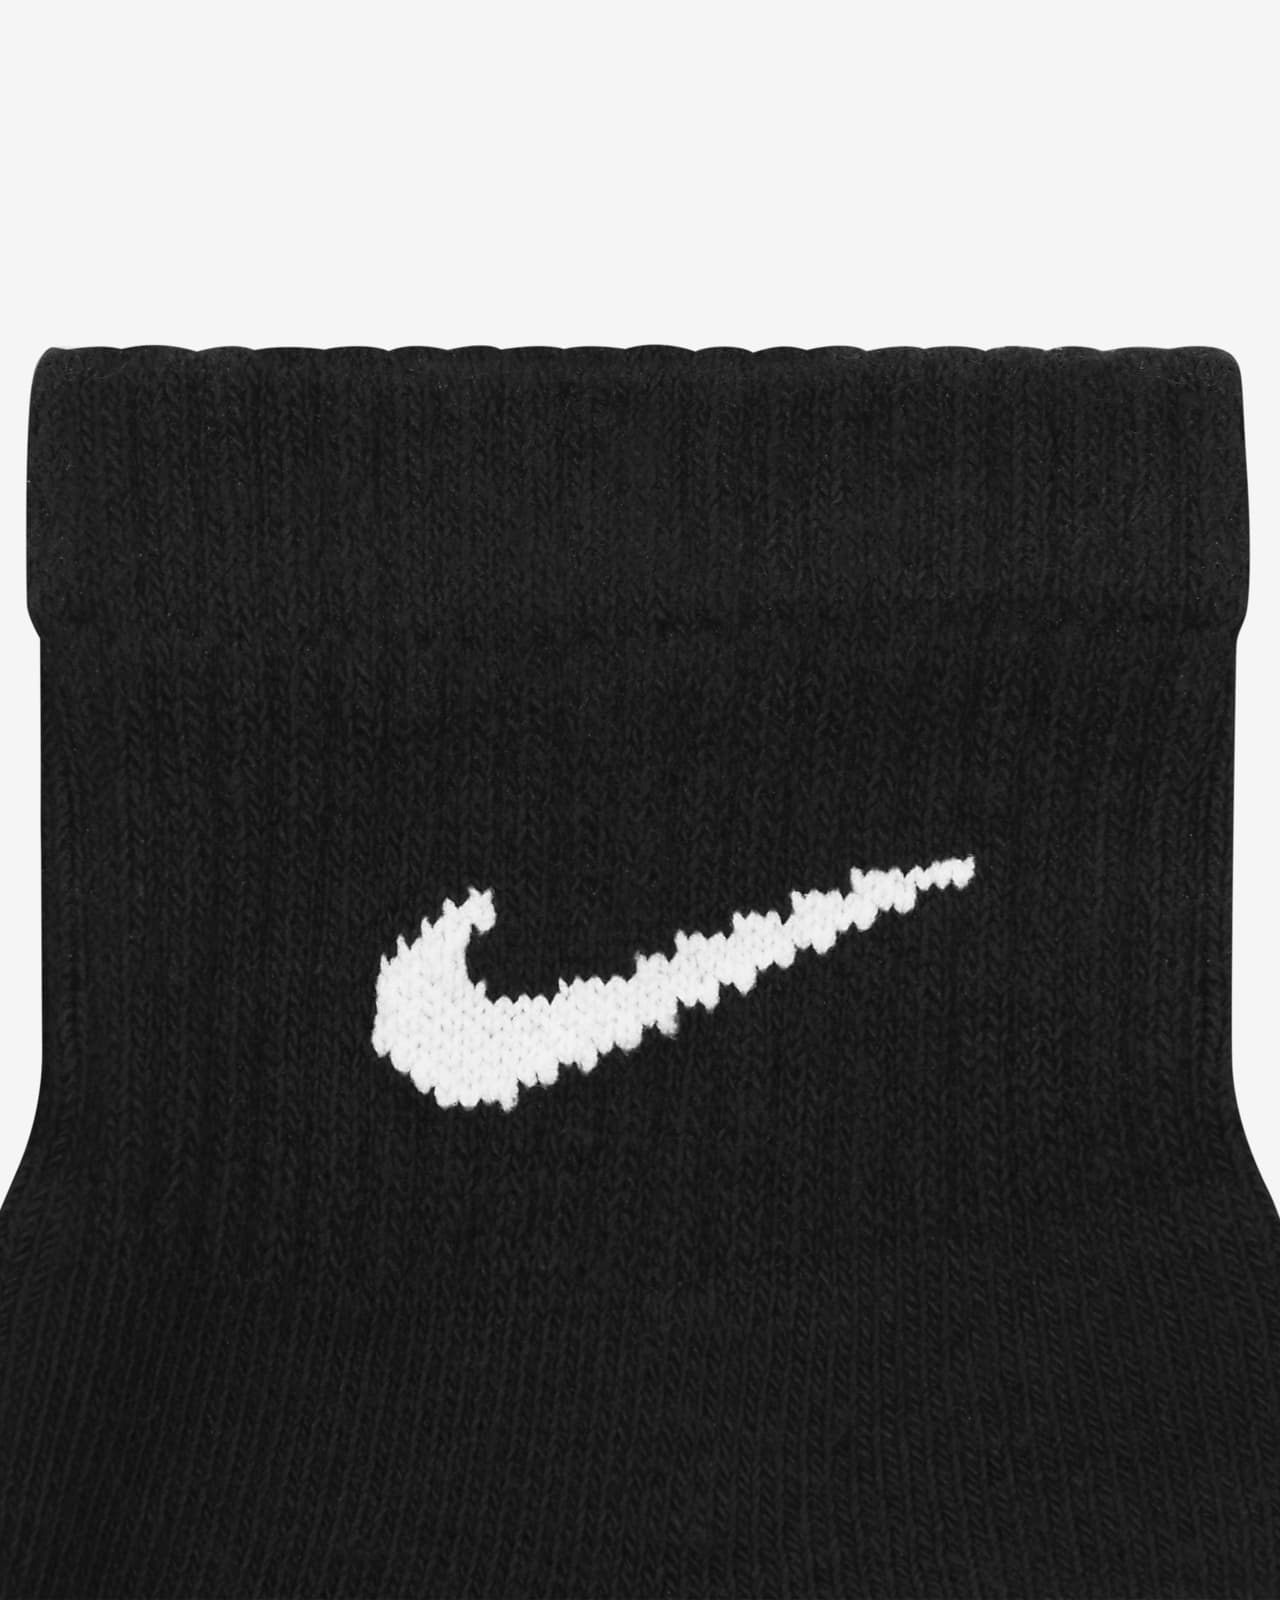 Nike Everyday Plus Cushioned Training Crew Socks (6 Pack) White / Blac